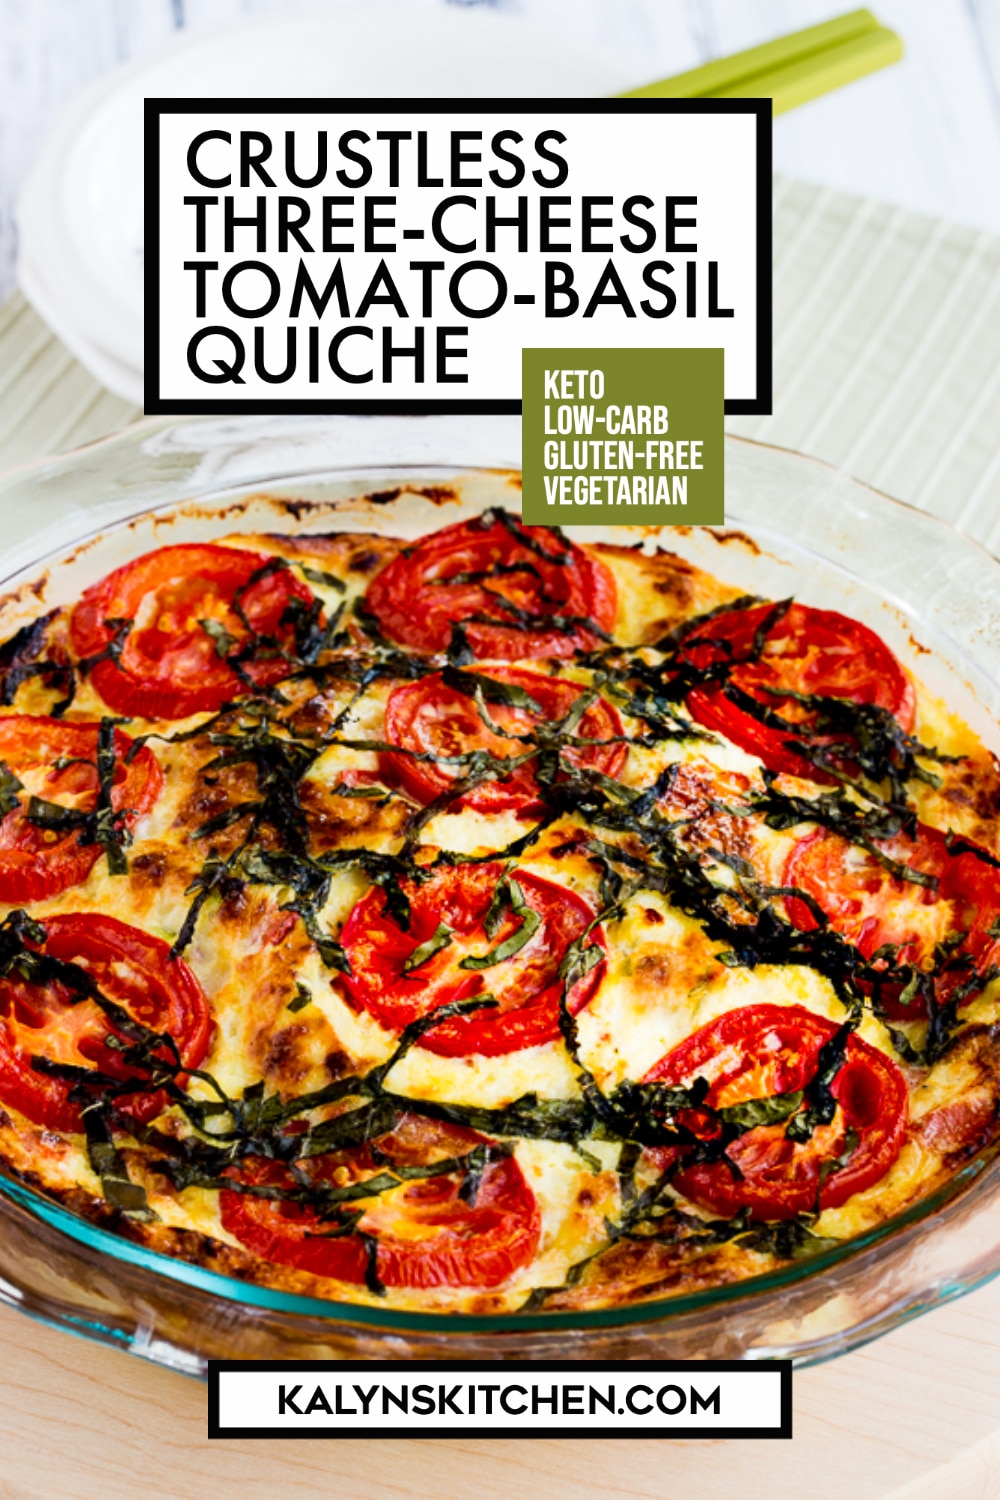 Pinterest image of Crustless Three-Cheese Tomato-Basil Quiche